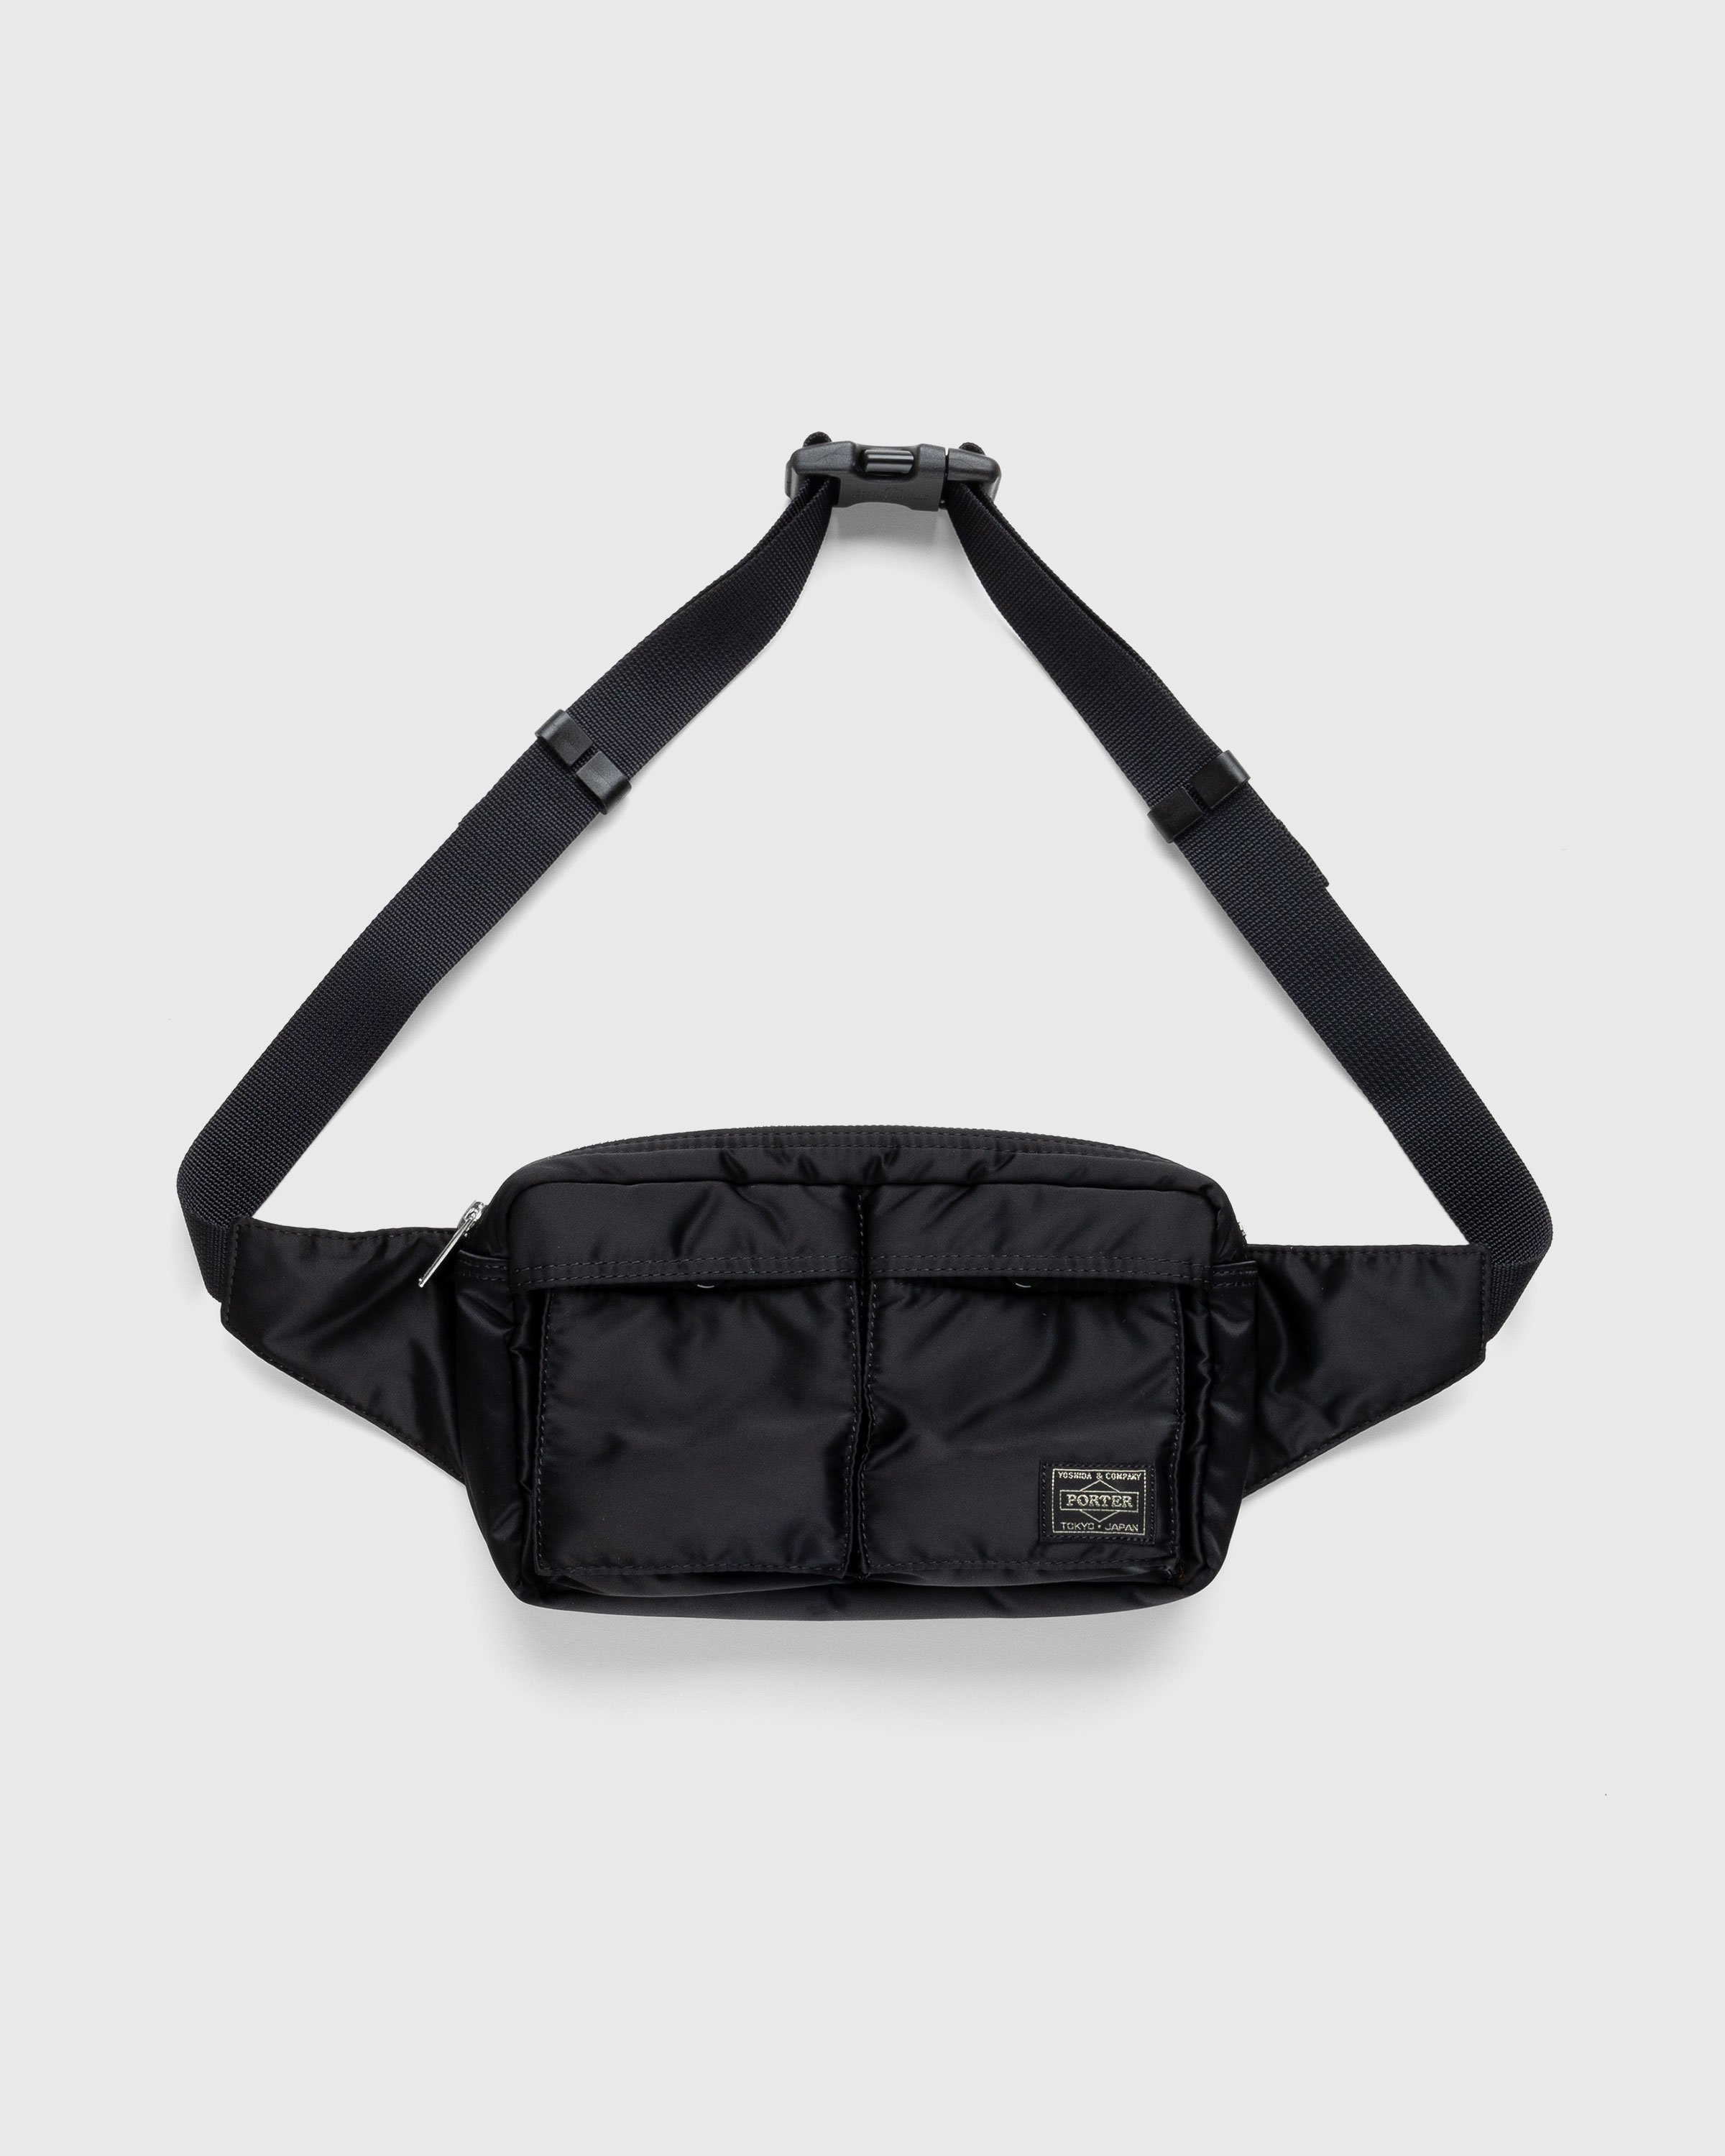 Porter-Yoshida & Co. – Tanker Waist Bag Black | Highsnobiety Shop